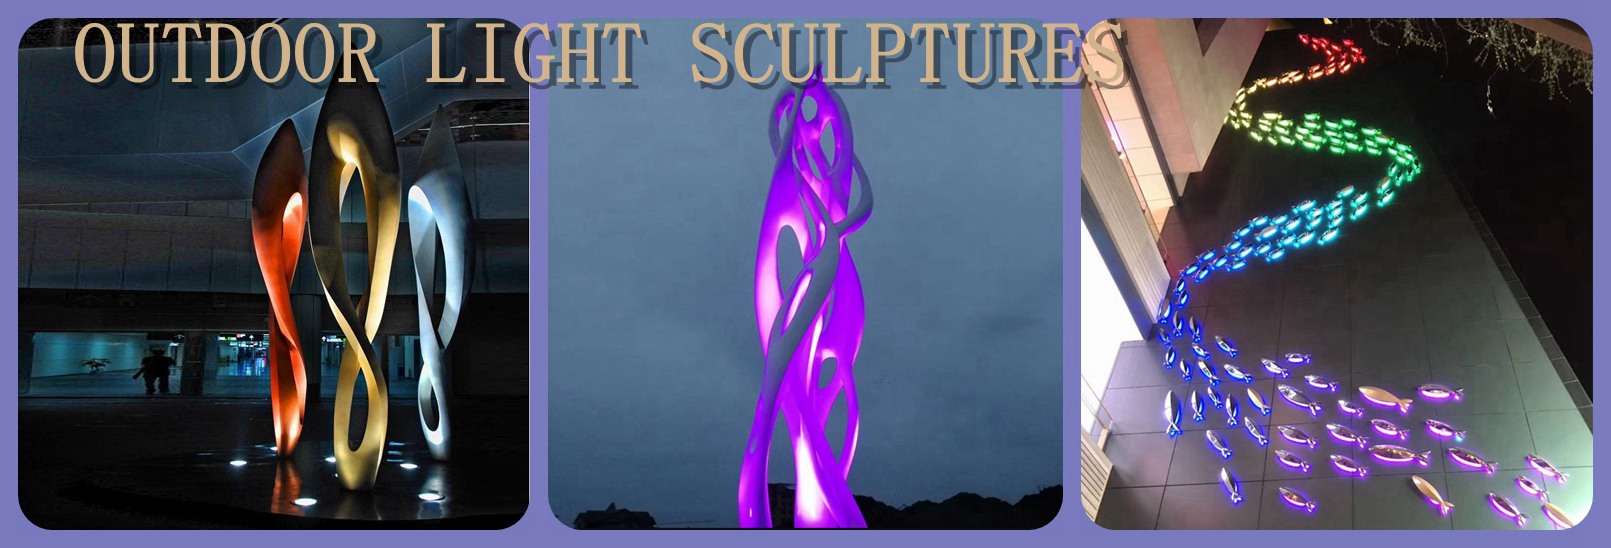 outdoor light sculptures